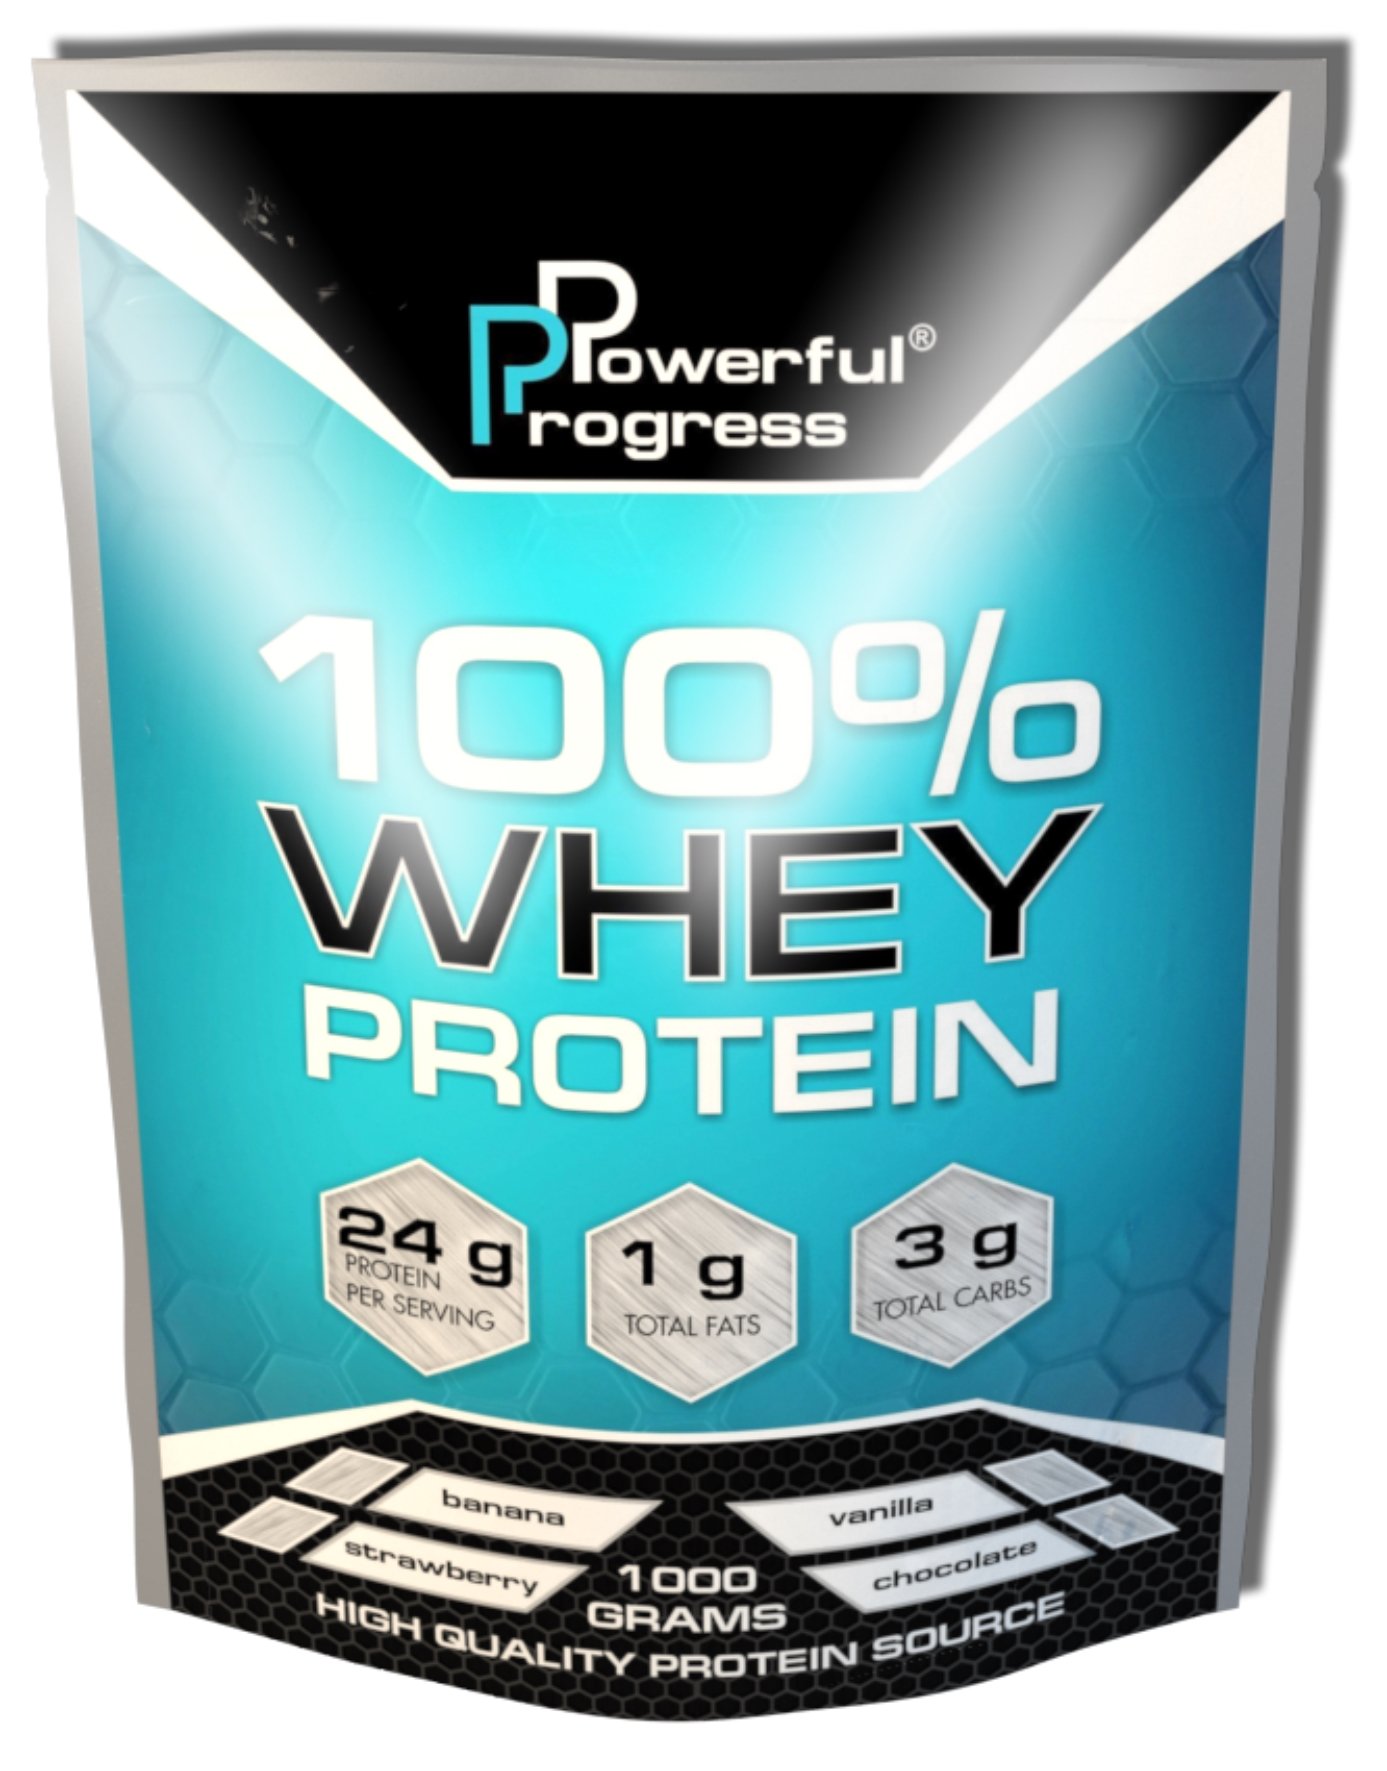 100% Whey Protein, 1000 g, Powerful Progress. Whey Protein. स्वास्थ्य लाभ Anti-catabolic properties Lean muscle mass 